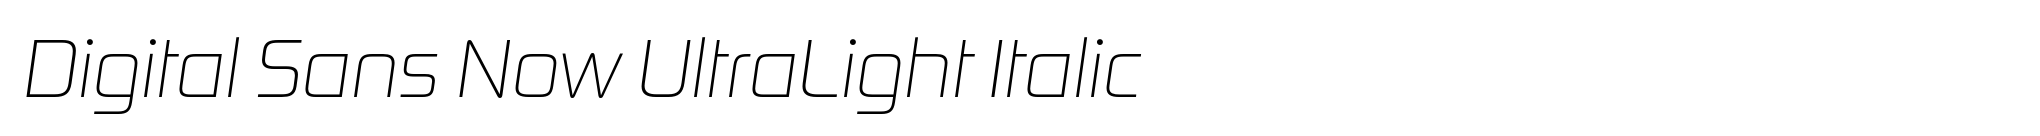 Digital Sans Now UltraLight Italic image